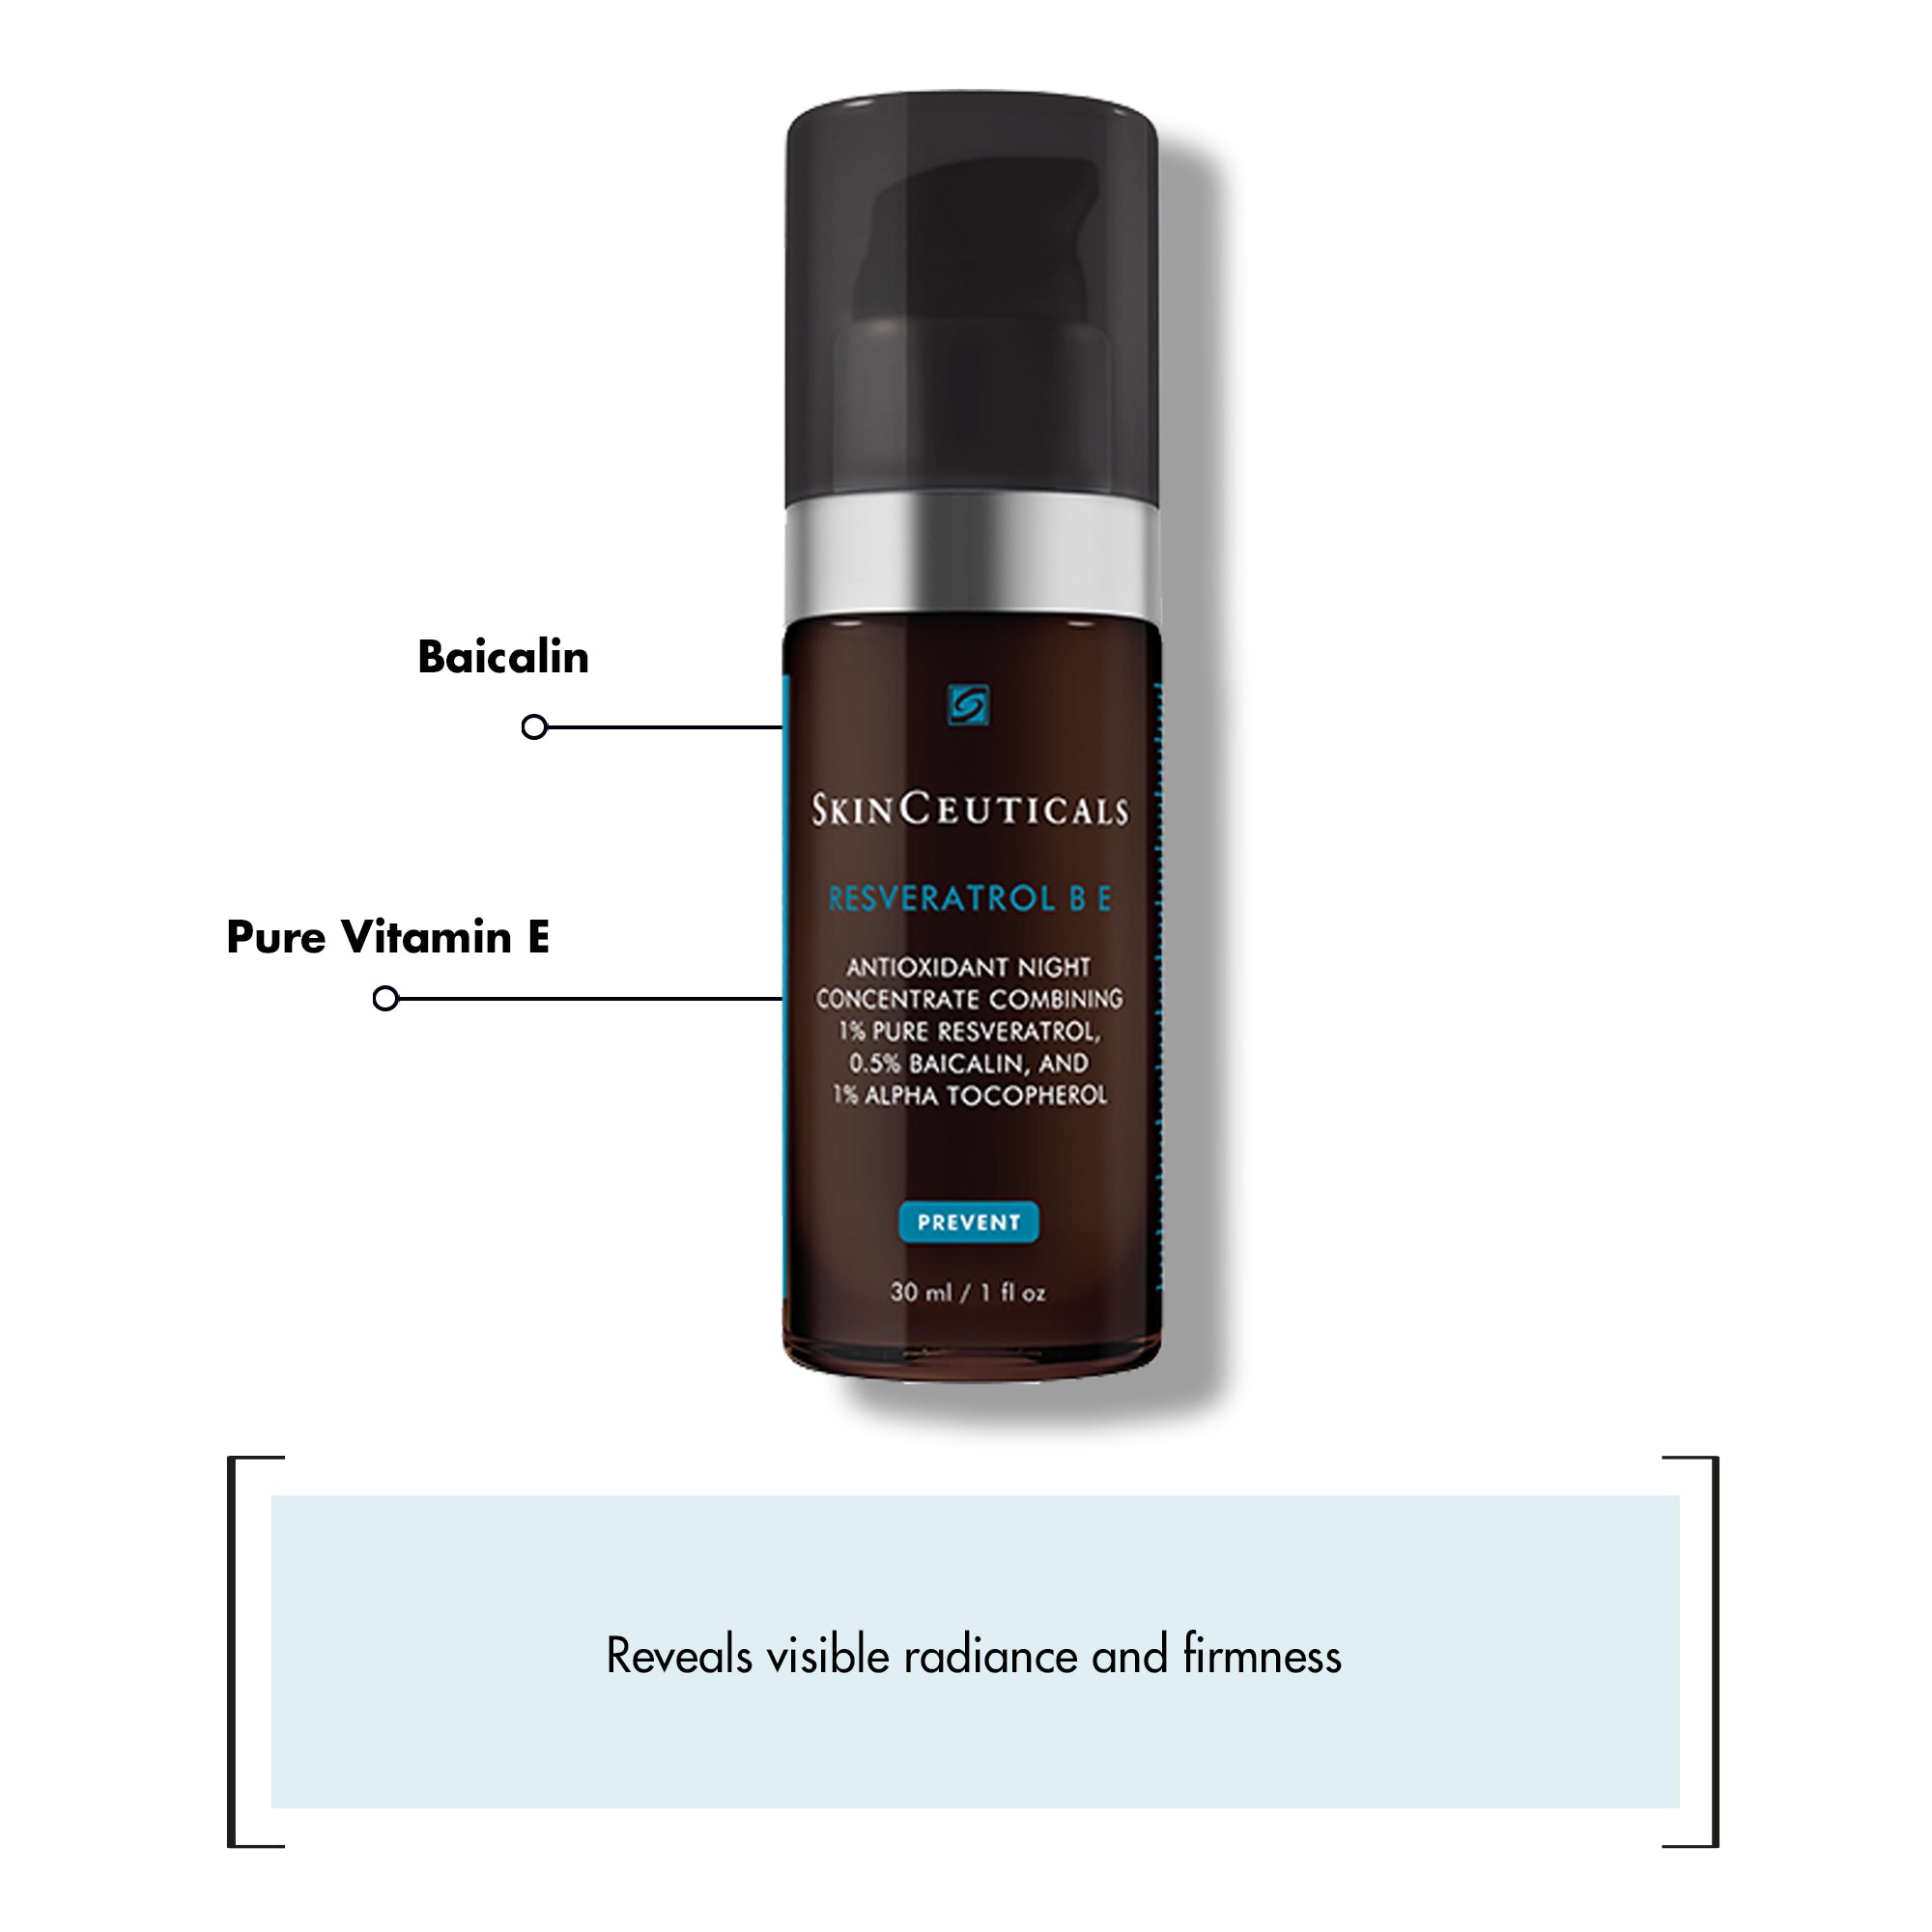 SKINCEUTICALS Resveratrol B E - Antioxidant Night Concentrate for Skin Rejuvenation, 30ml